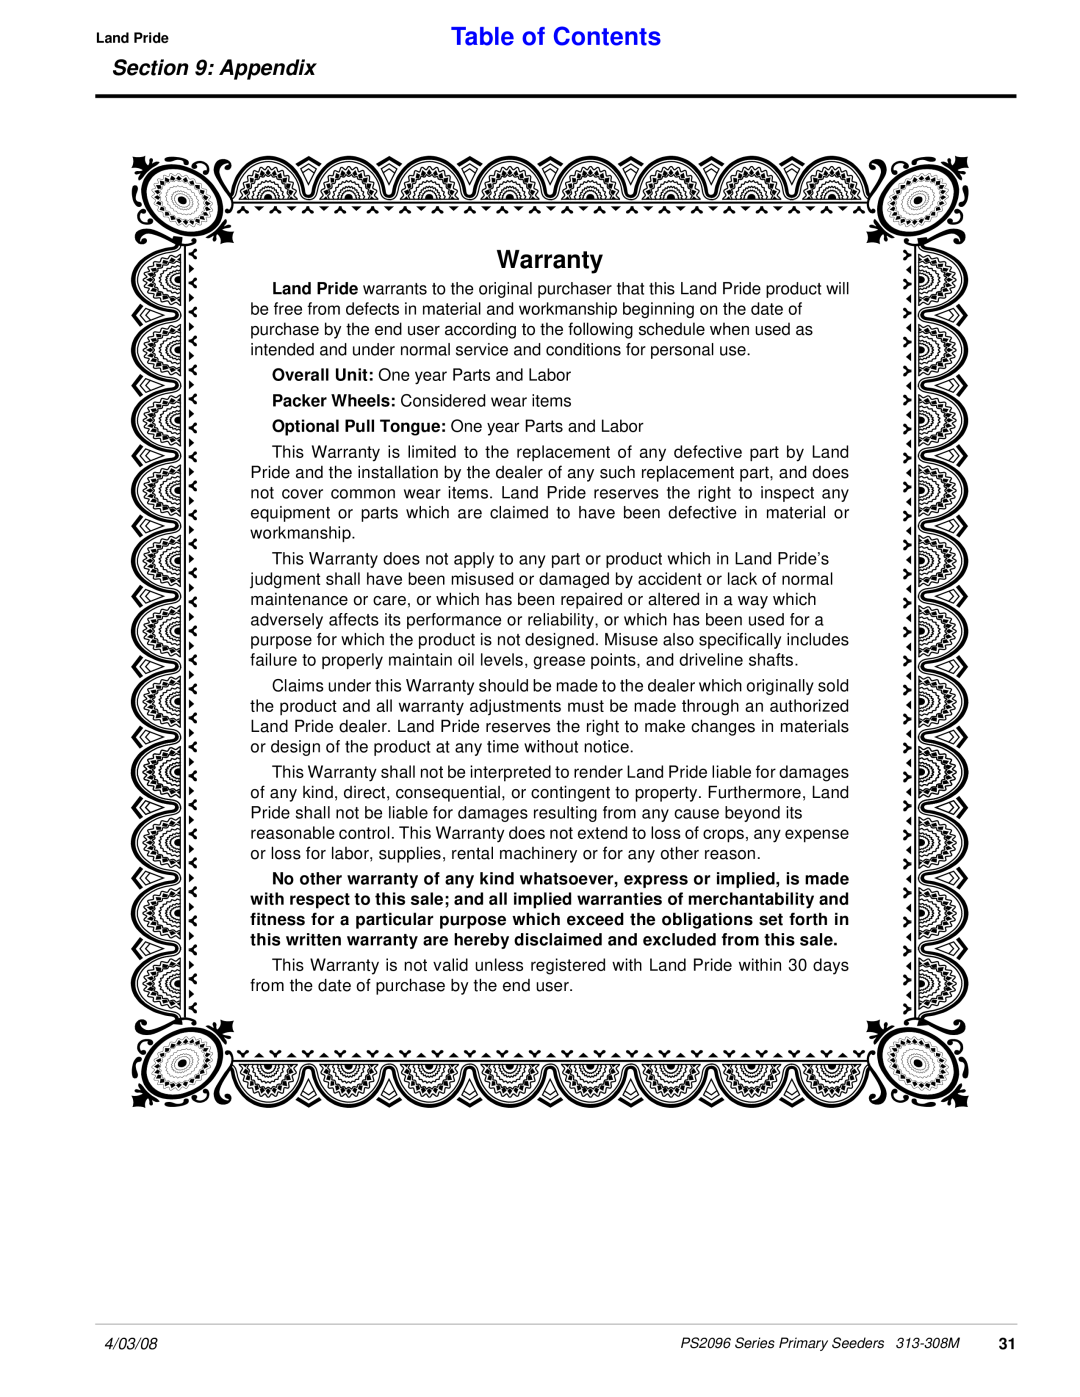 Land Pride 313-308M manual Warranty, Table of Contents, Appendix 